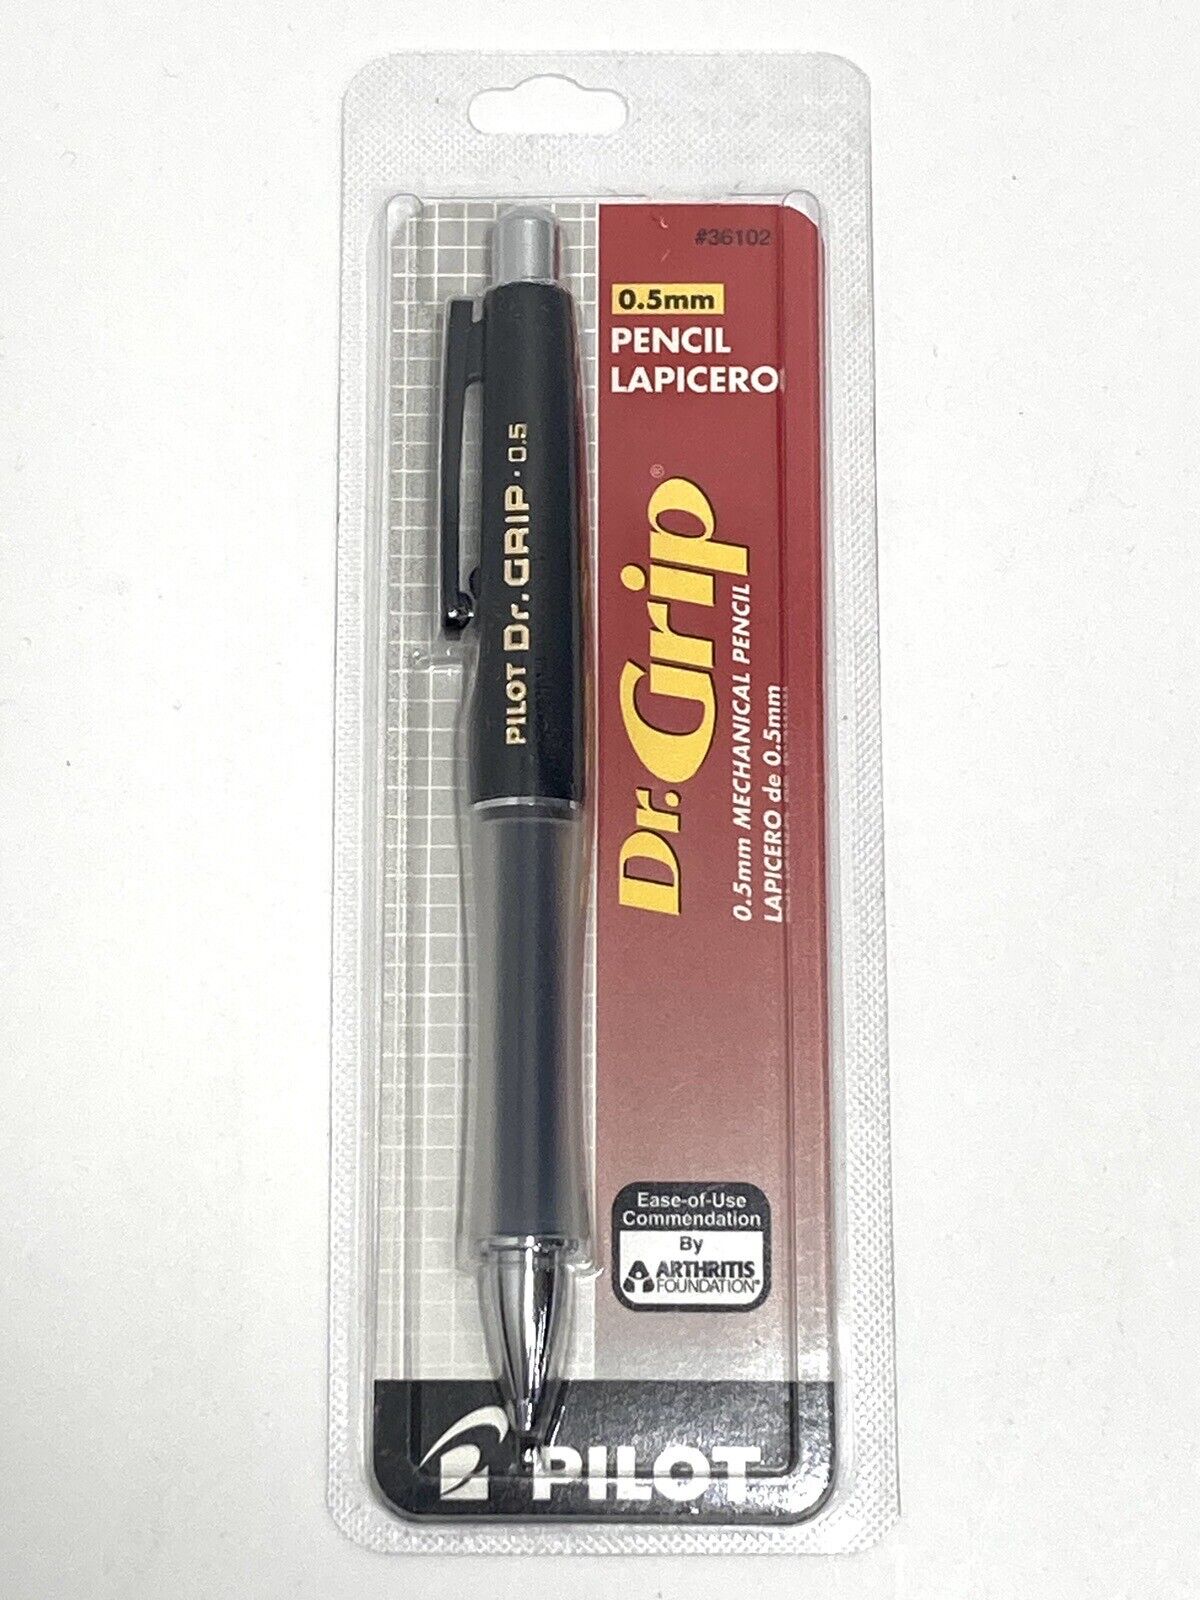 VTG PILOT Dr. Grip Mechanical Pencil 36102 0.5mm #BHDG5 Case Fresh NOS Deadstock